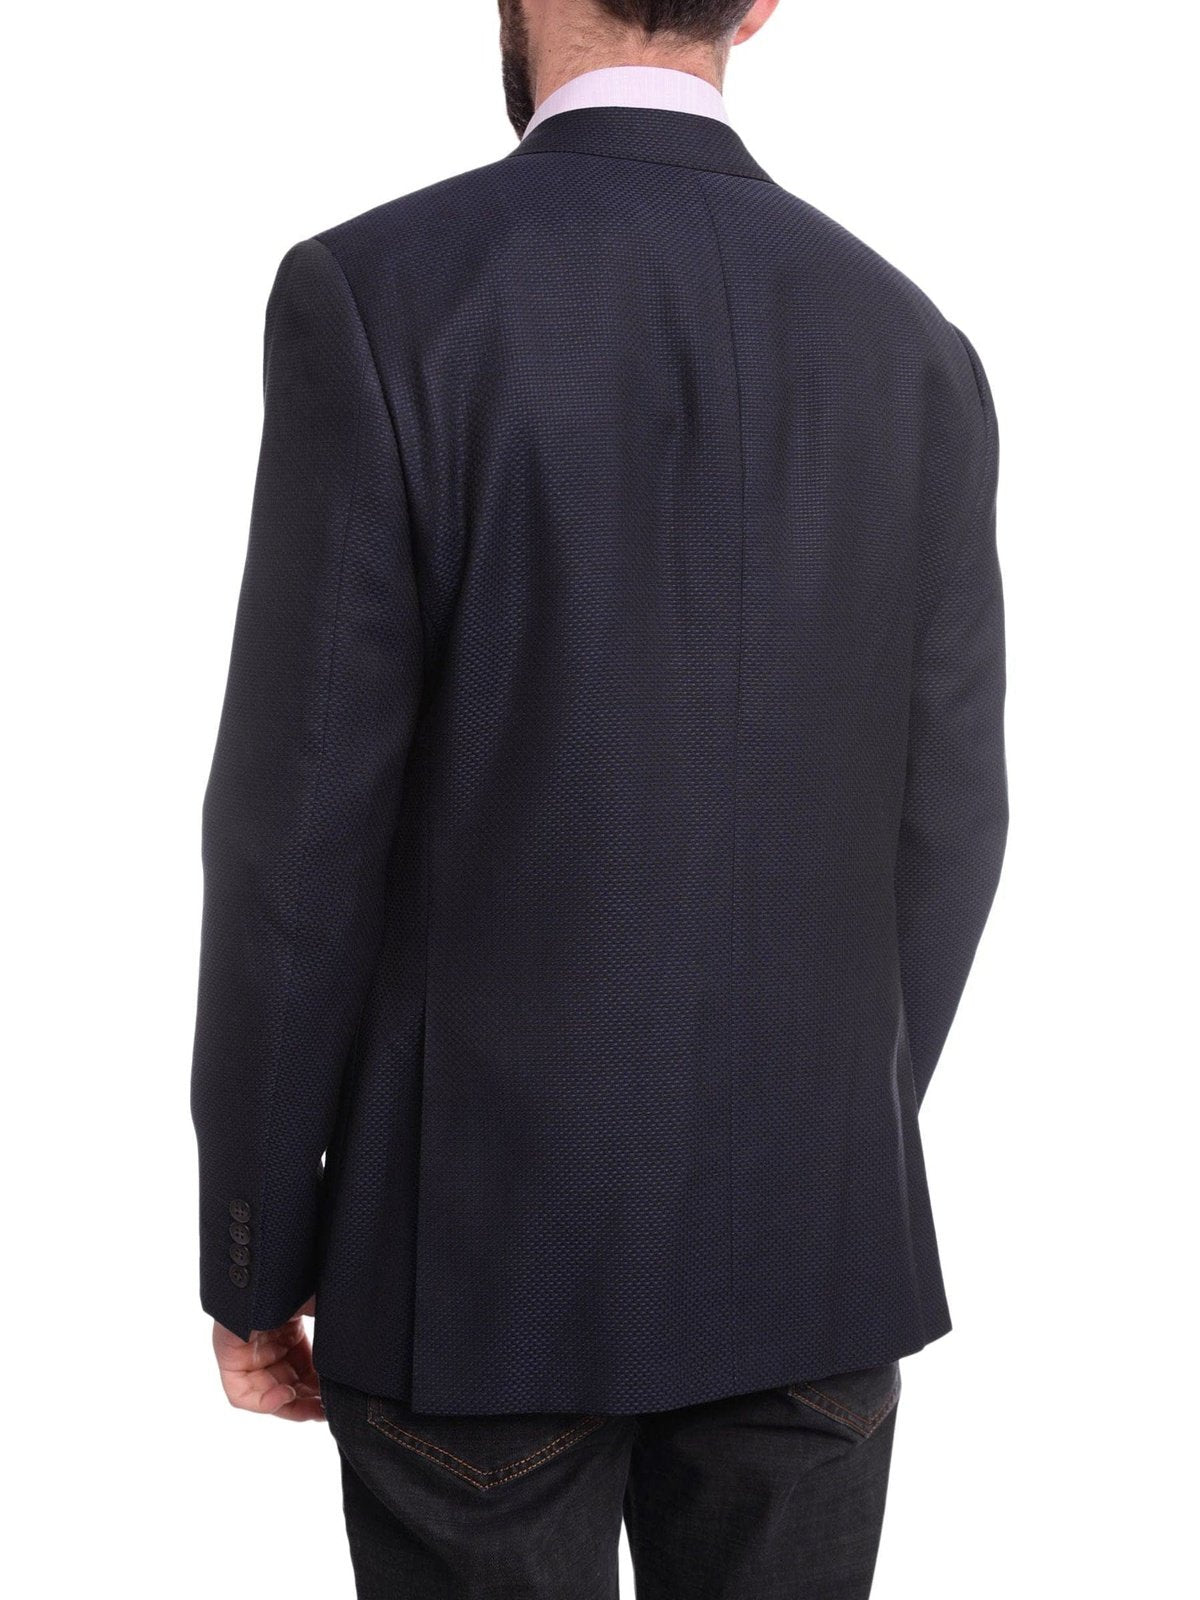 back view of navy blue slim fit blazer